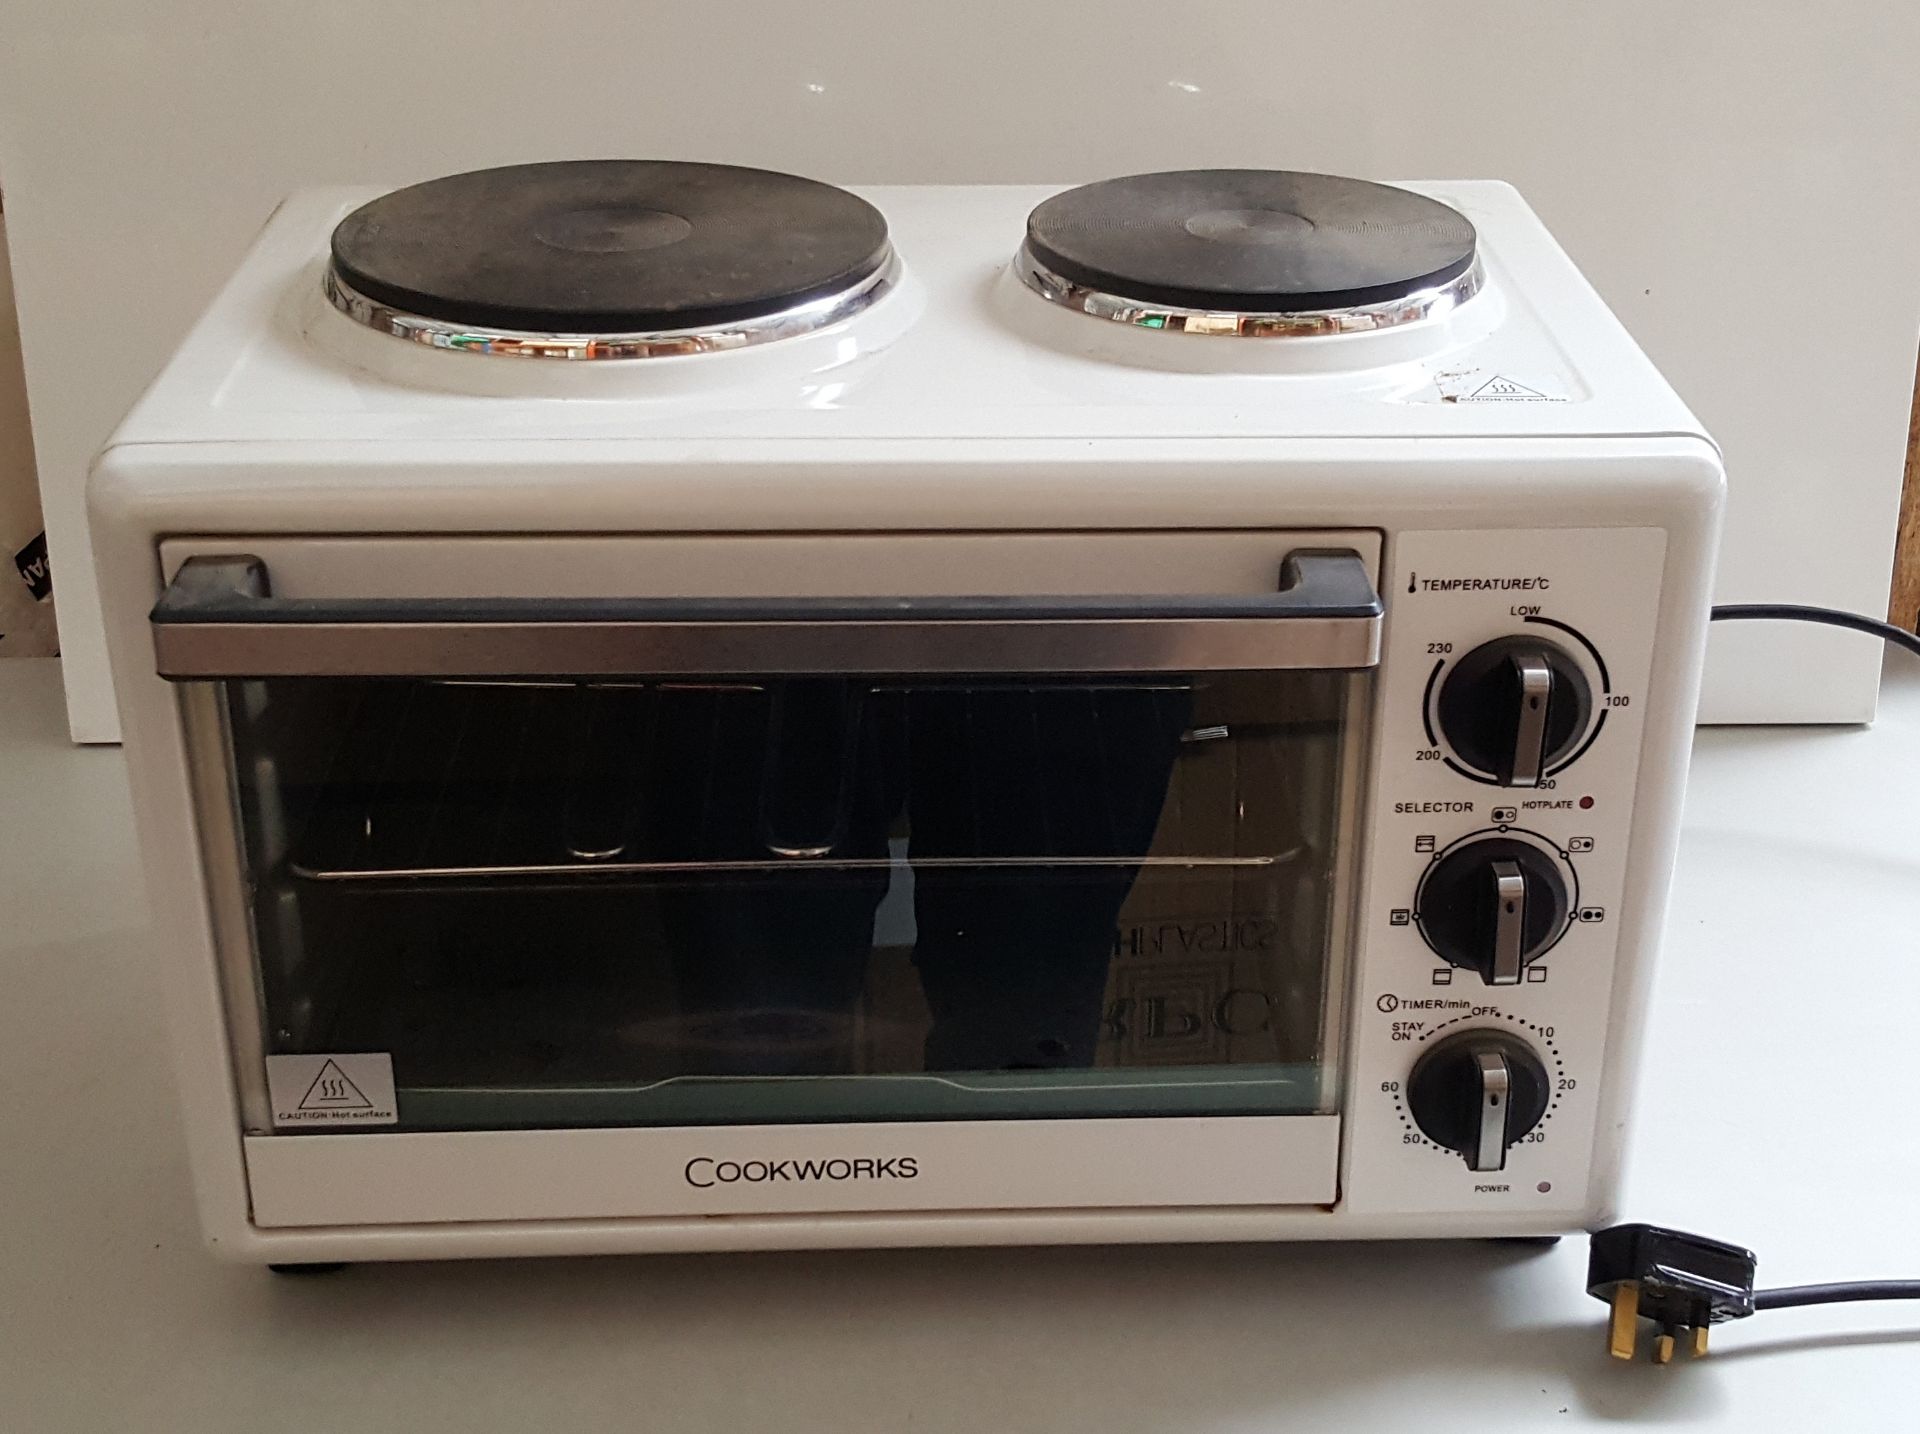 1 x Cookworks Mini Oven Dual Hobs 1750W KH-H28RC-10Skh - Ref RC141  - CL011 - Location: Altrincham